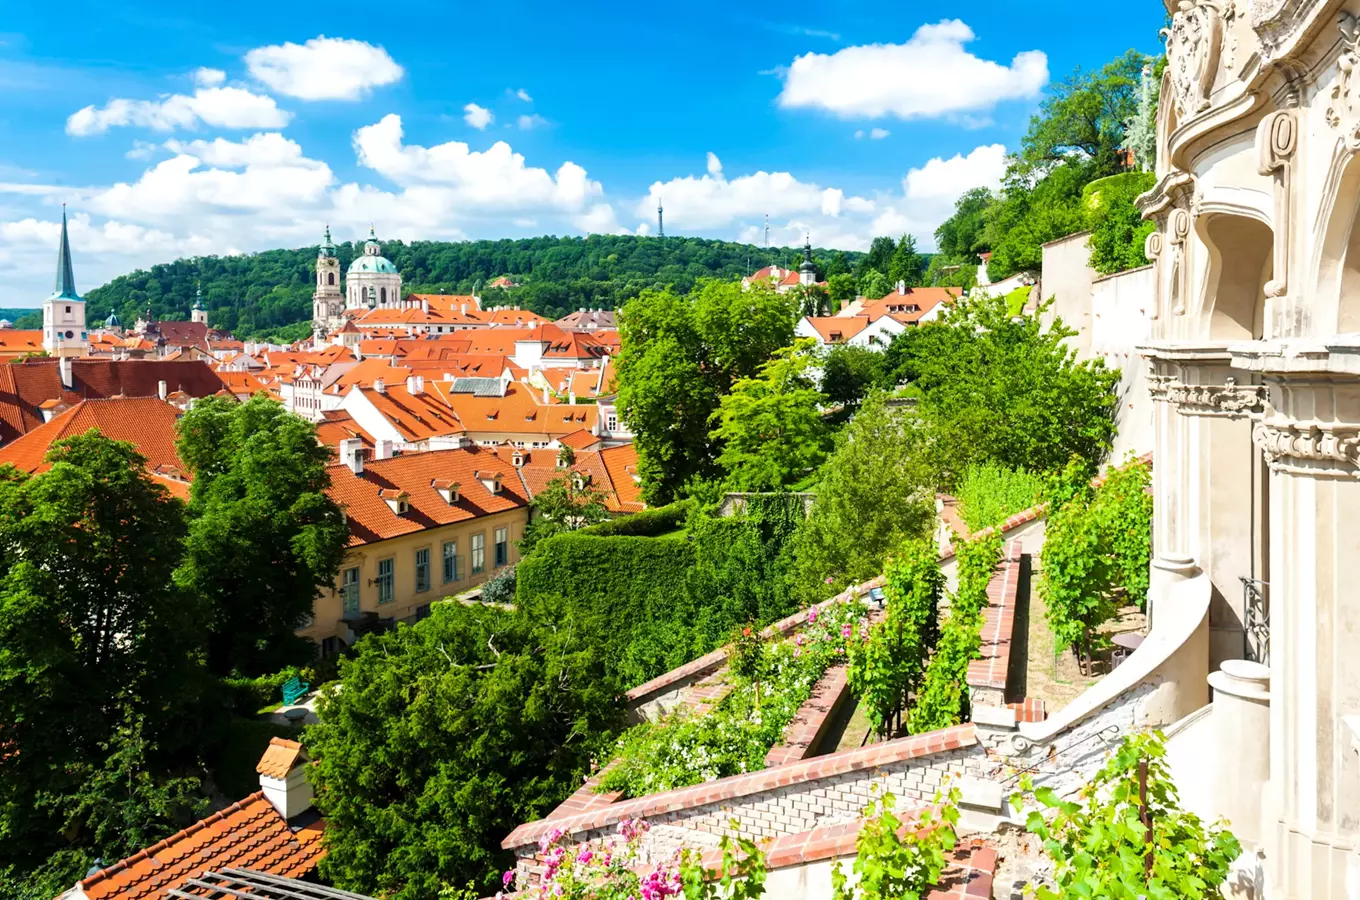 Víkend otevřených zahrad v Praze odhalí krásná i tajemná zákoutí